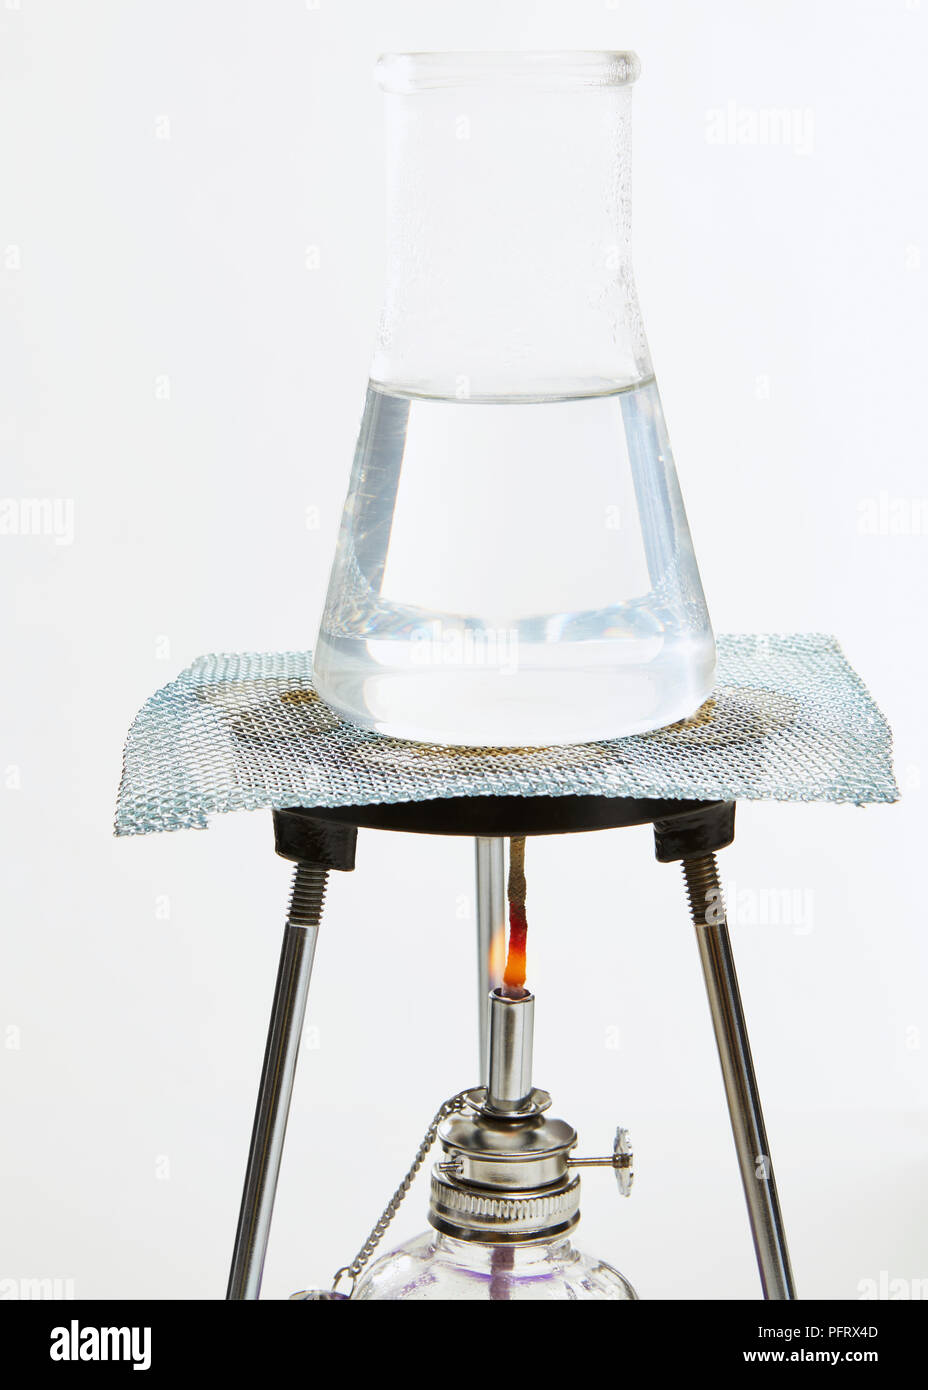 Matraz Erlenmeyer de vidrio sobre un trípode que contiene agua que se calienta Foto de stock